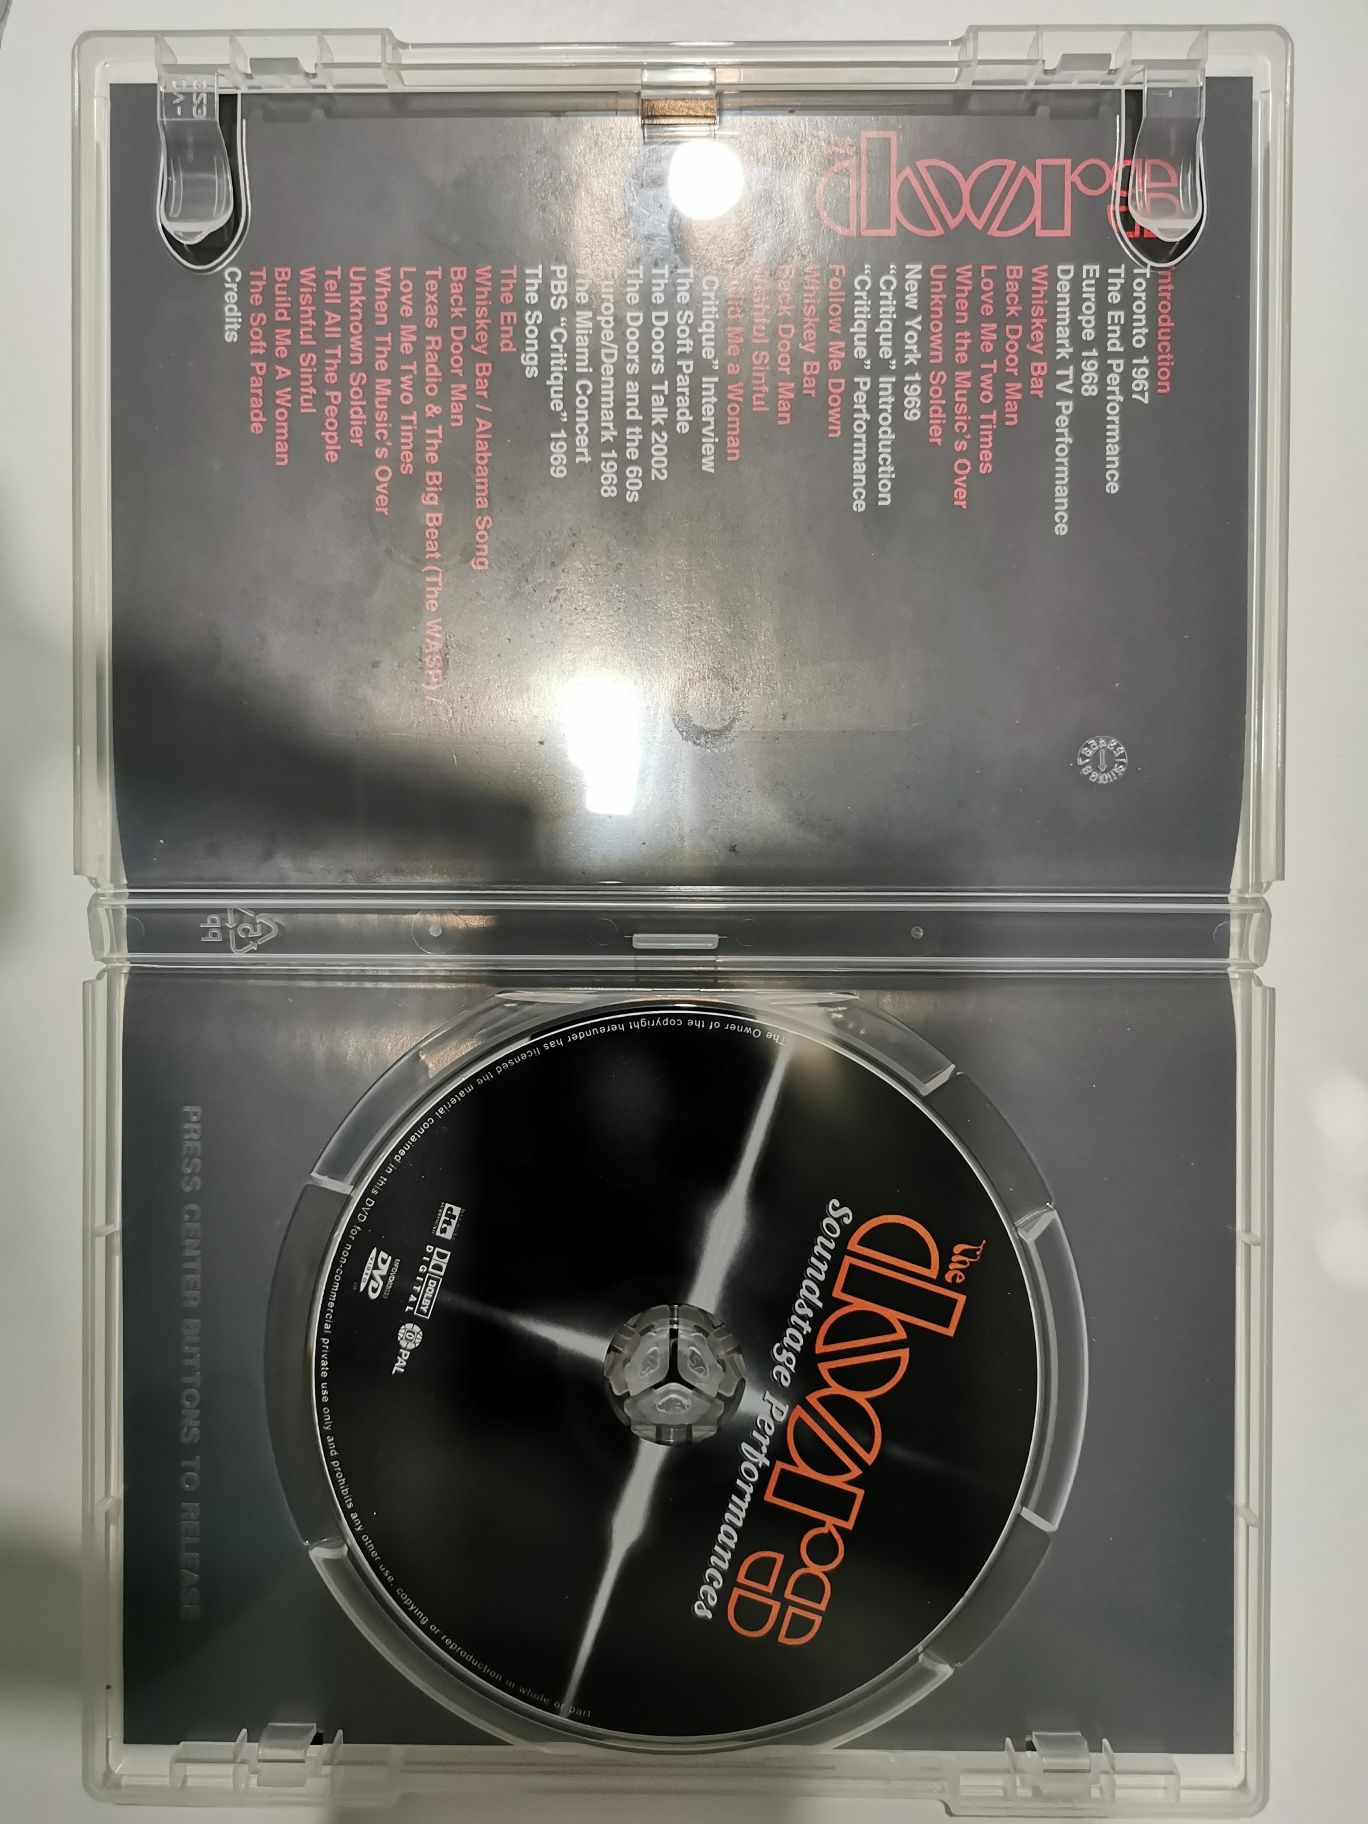 DVD - The Doors Soundstage performances